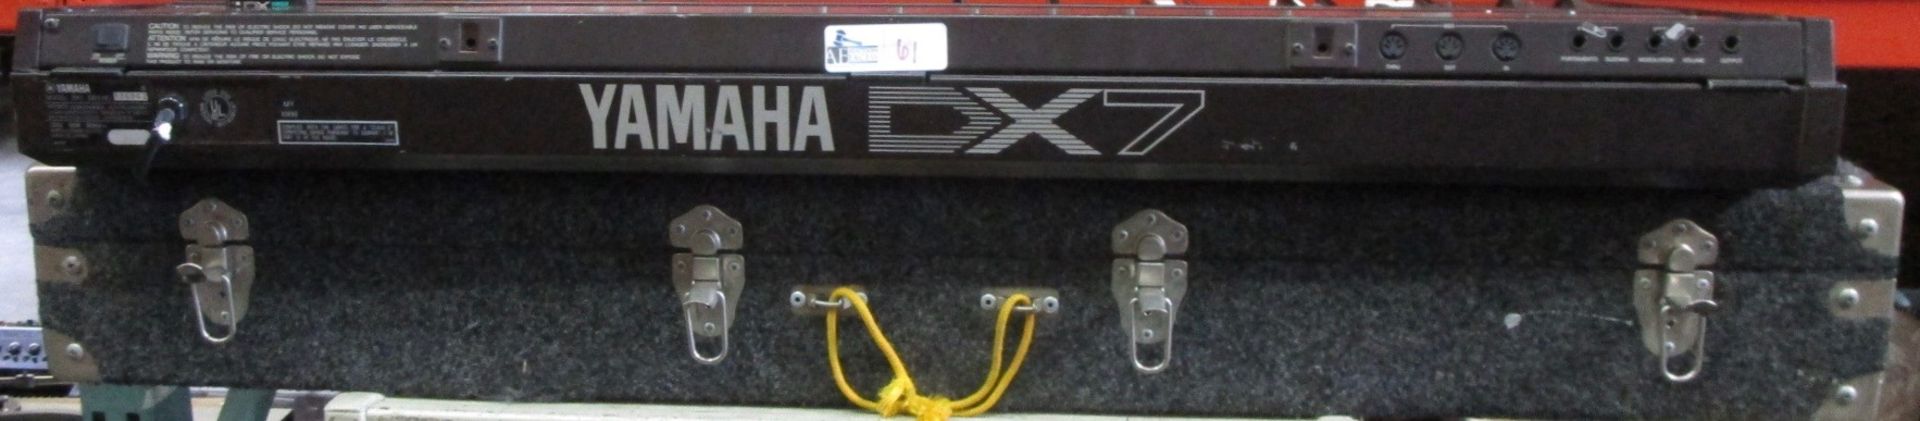 YAMAHA DX7 KEYBOARD IN CASE - Image 3 of 5